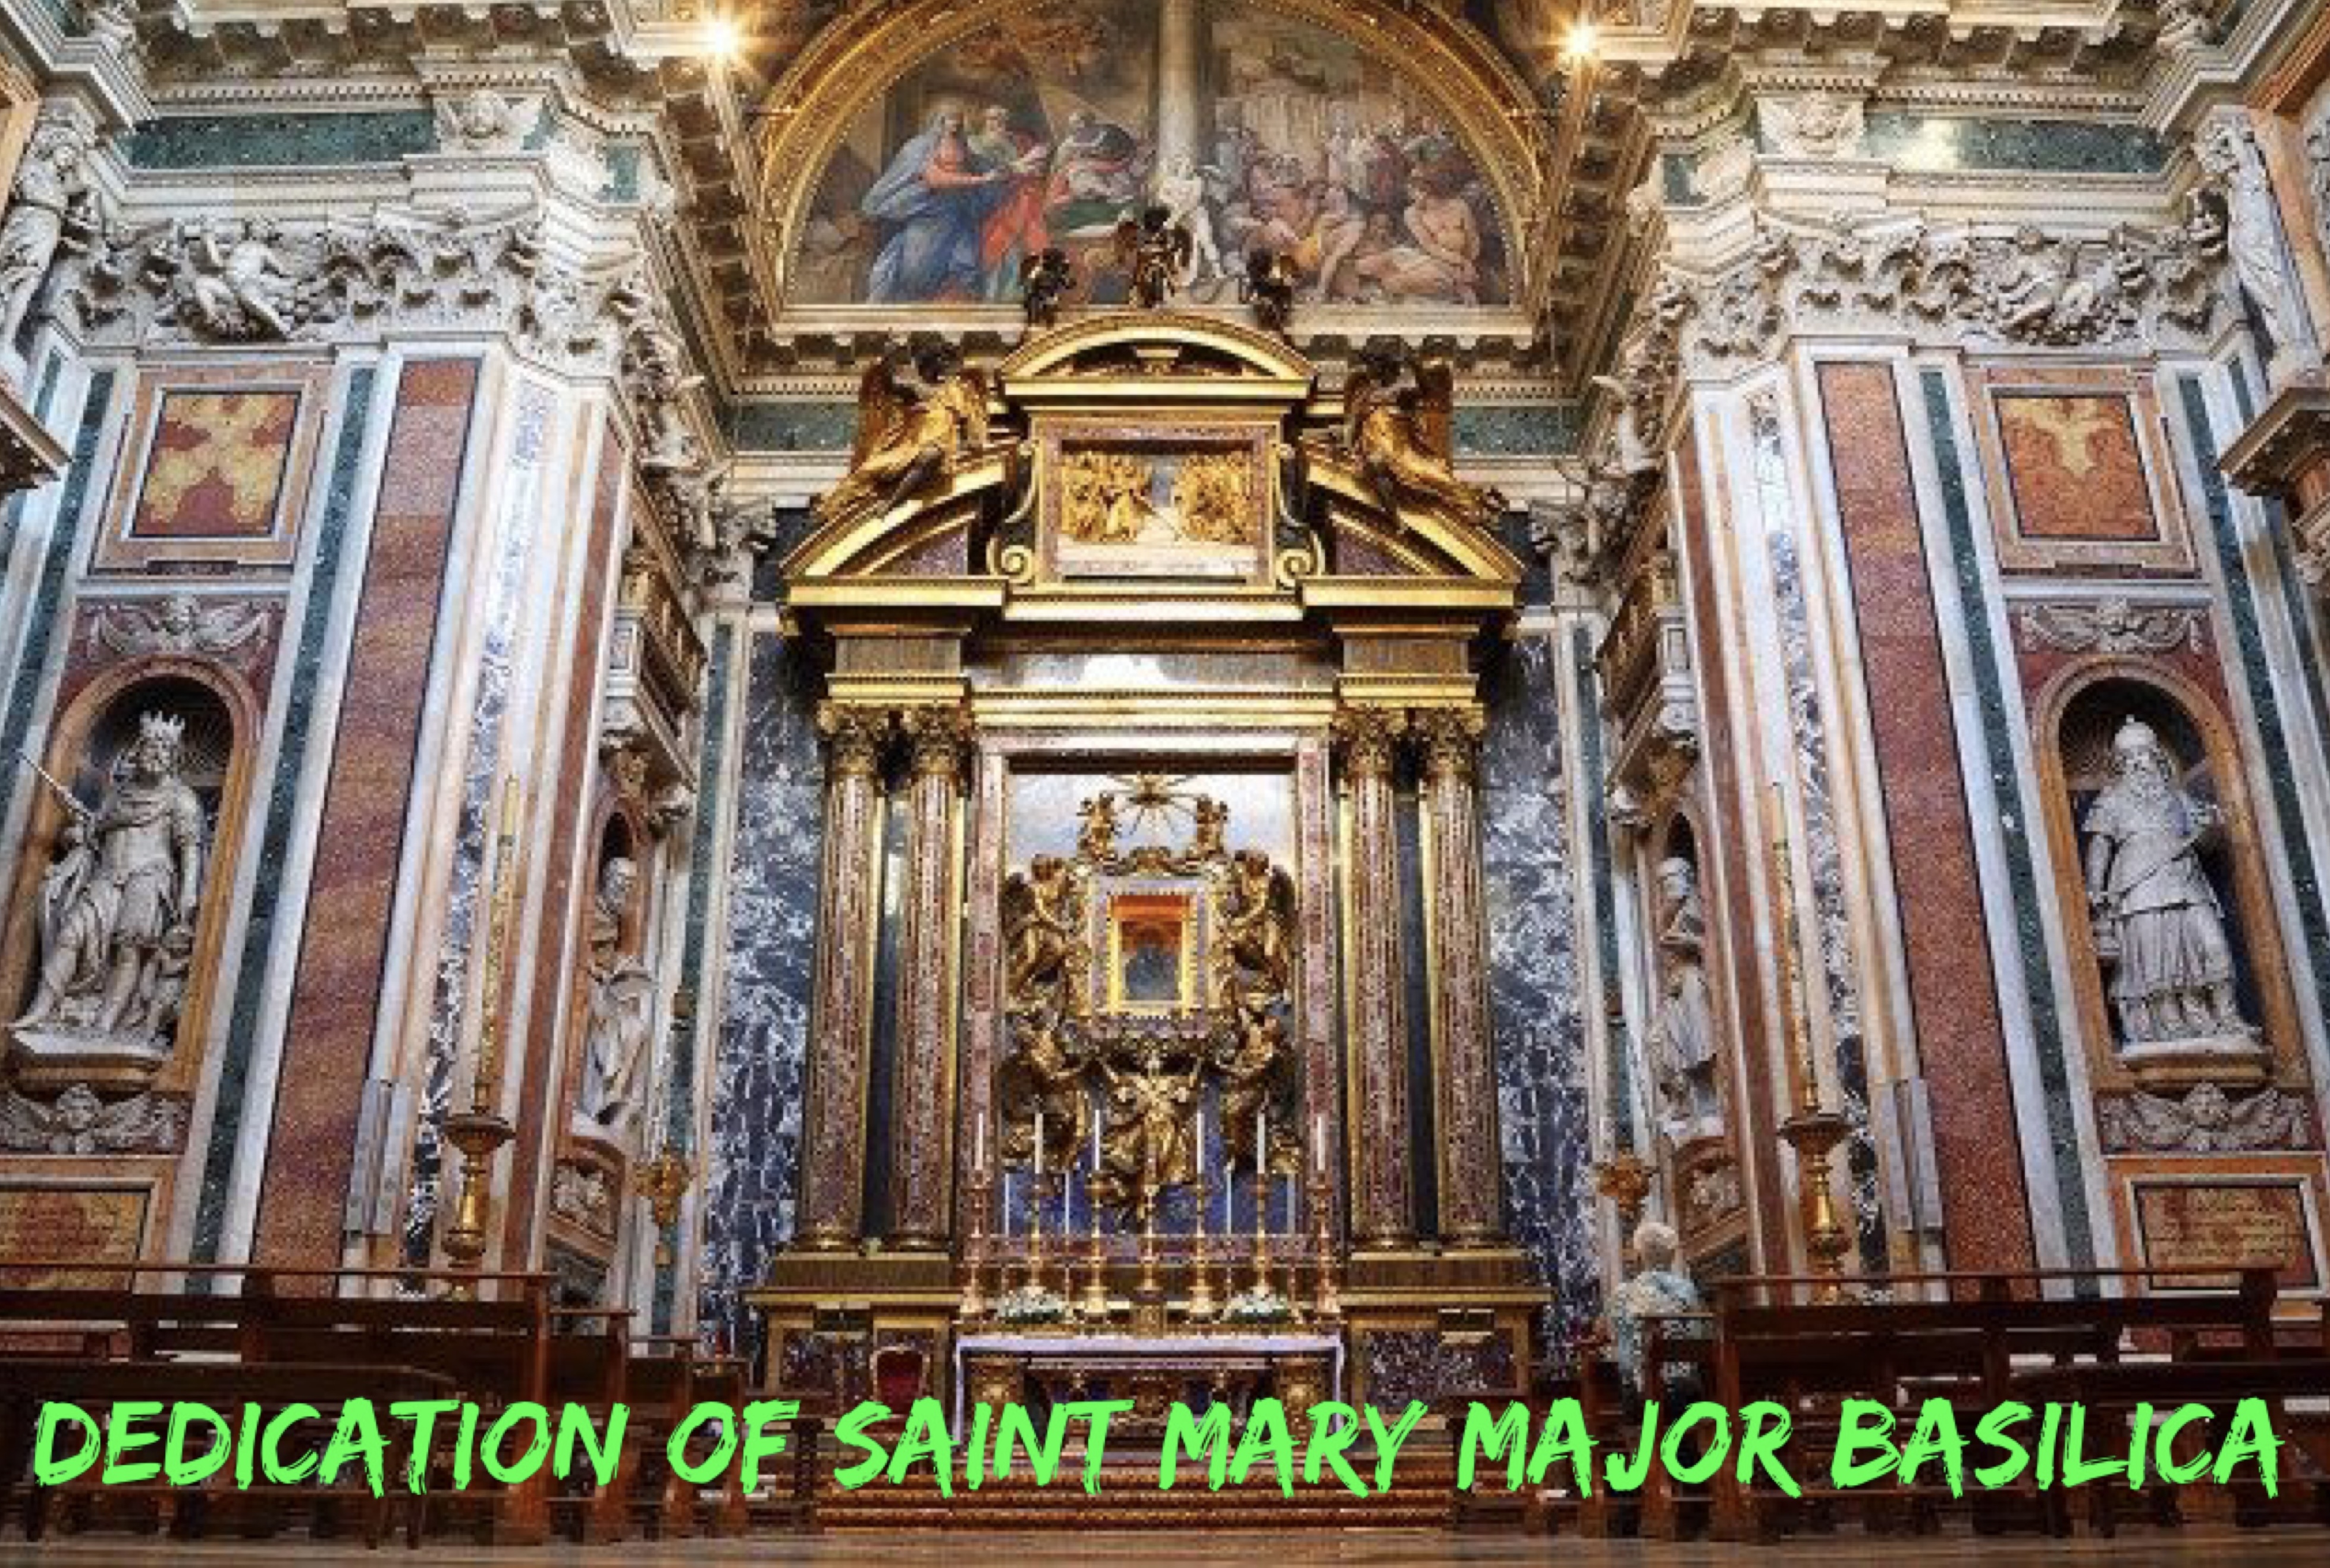 5th August - Dedication of Saint Mary Major Basilica